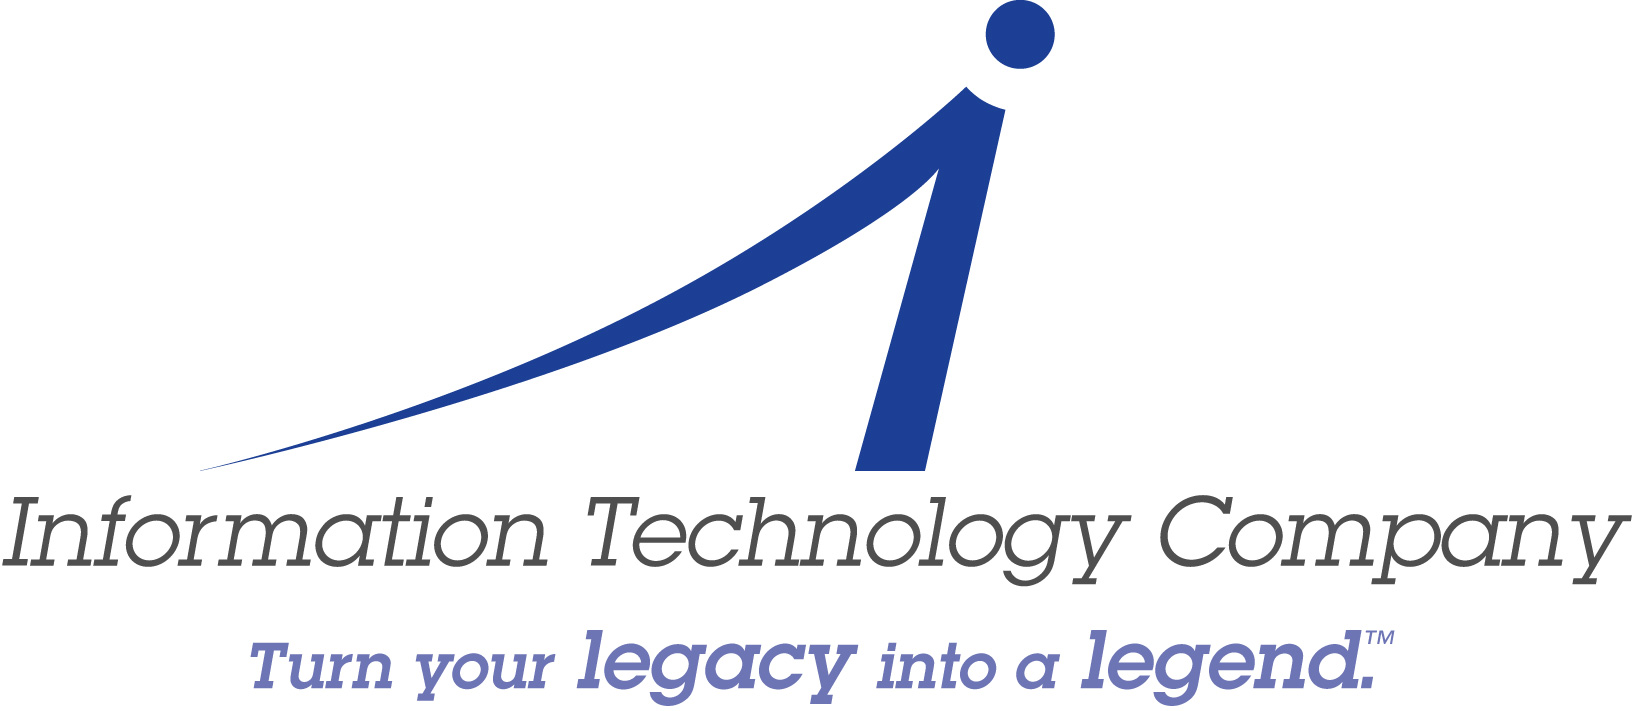 Information Technology Company, LLC